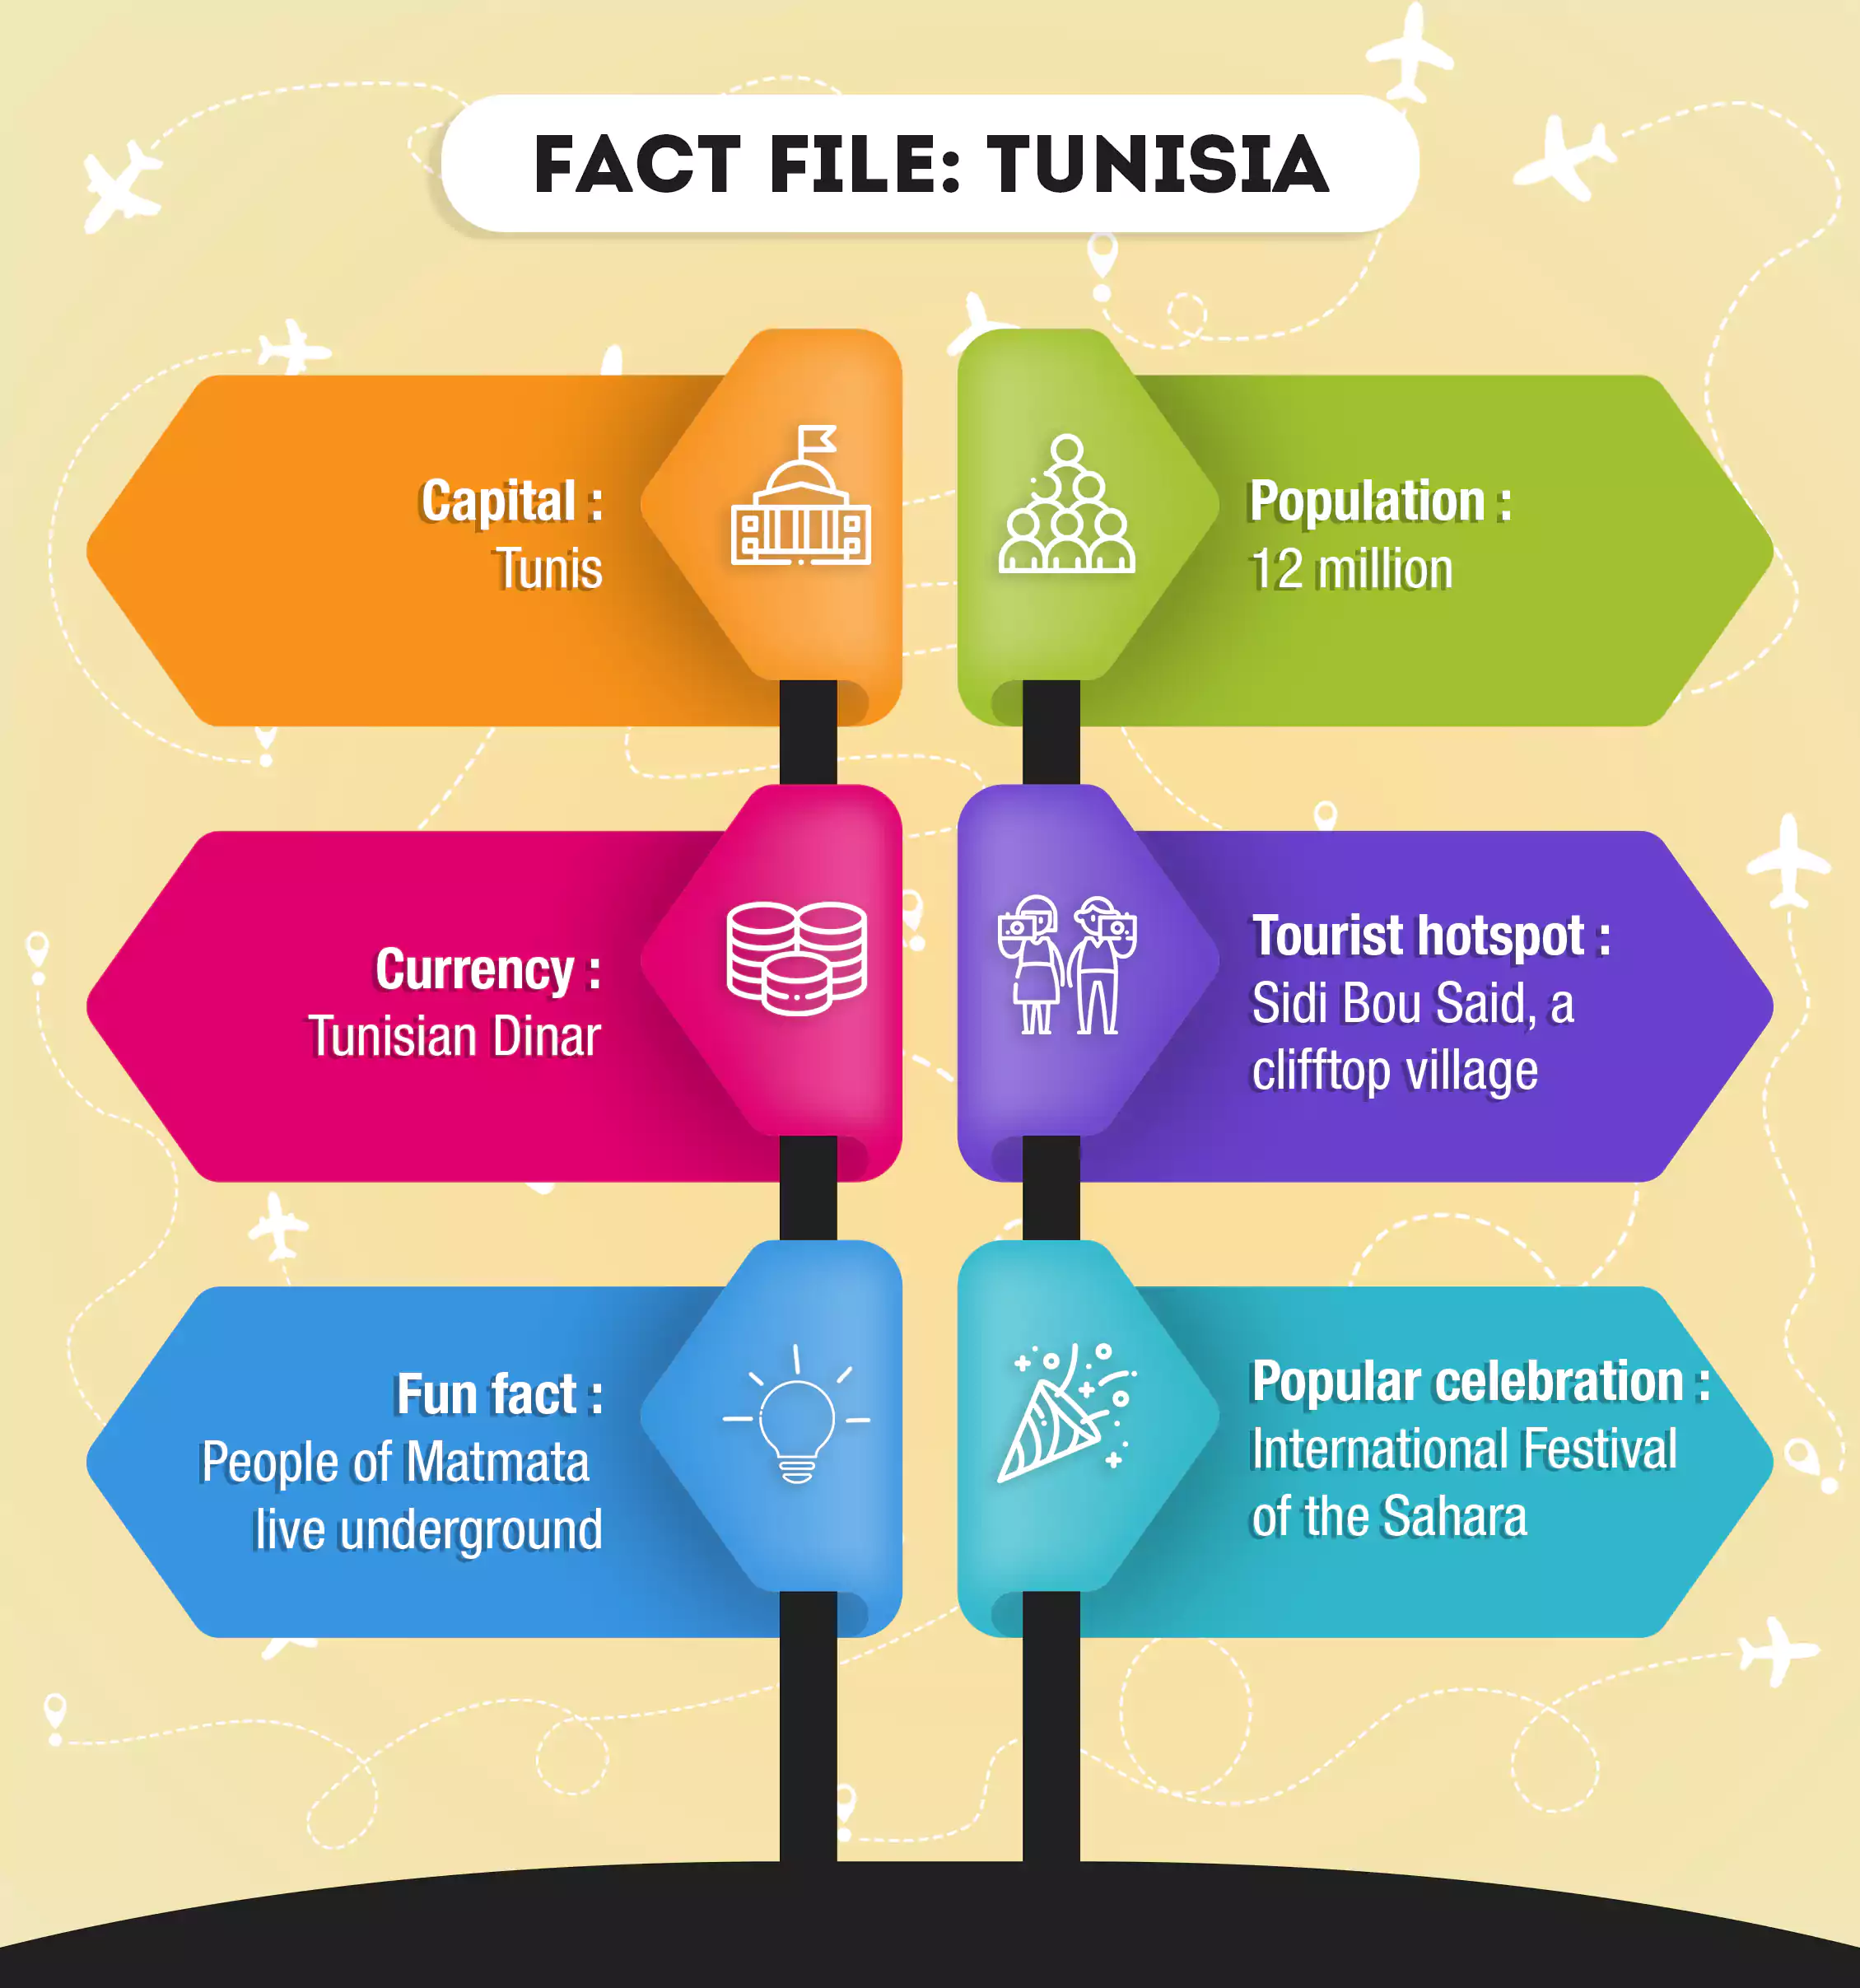 A fact file about Tunisia